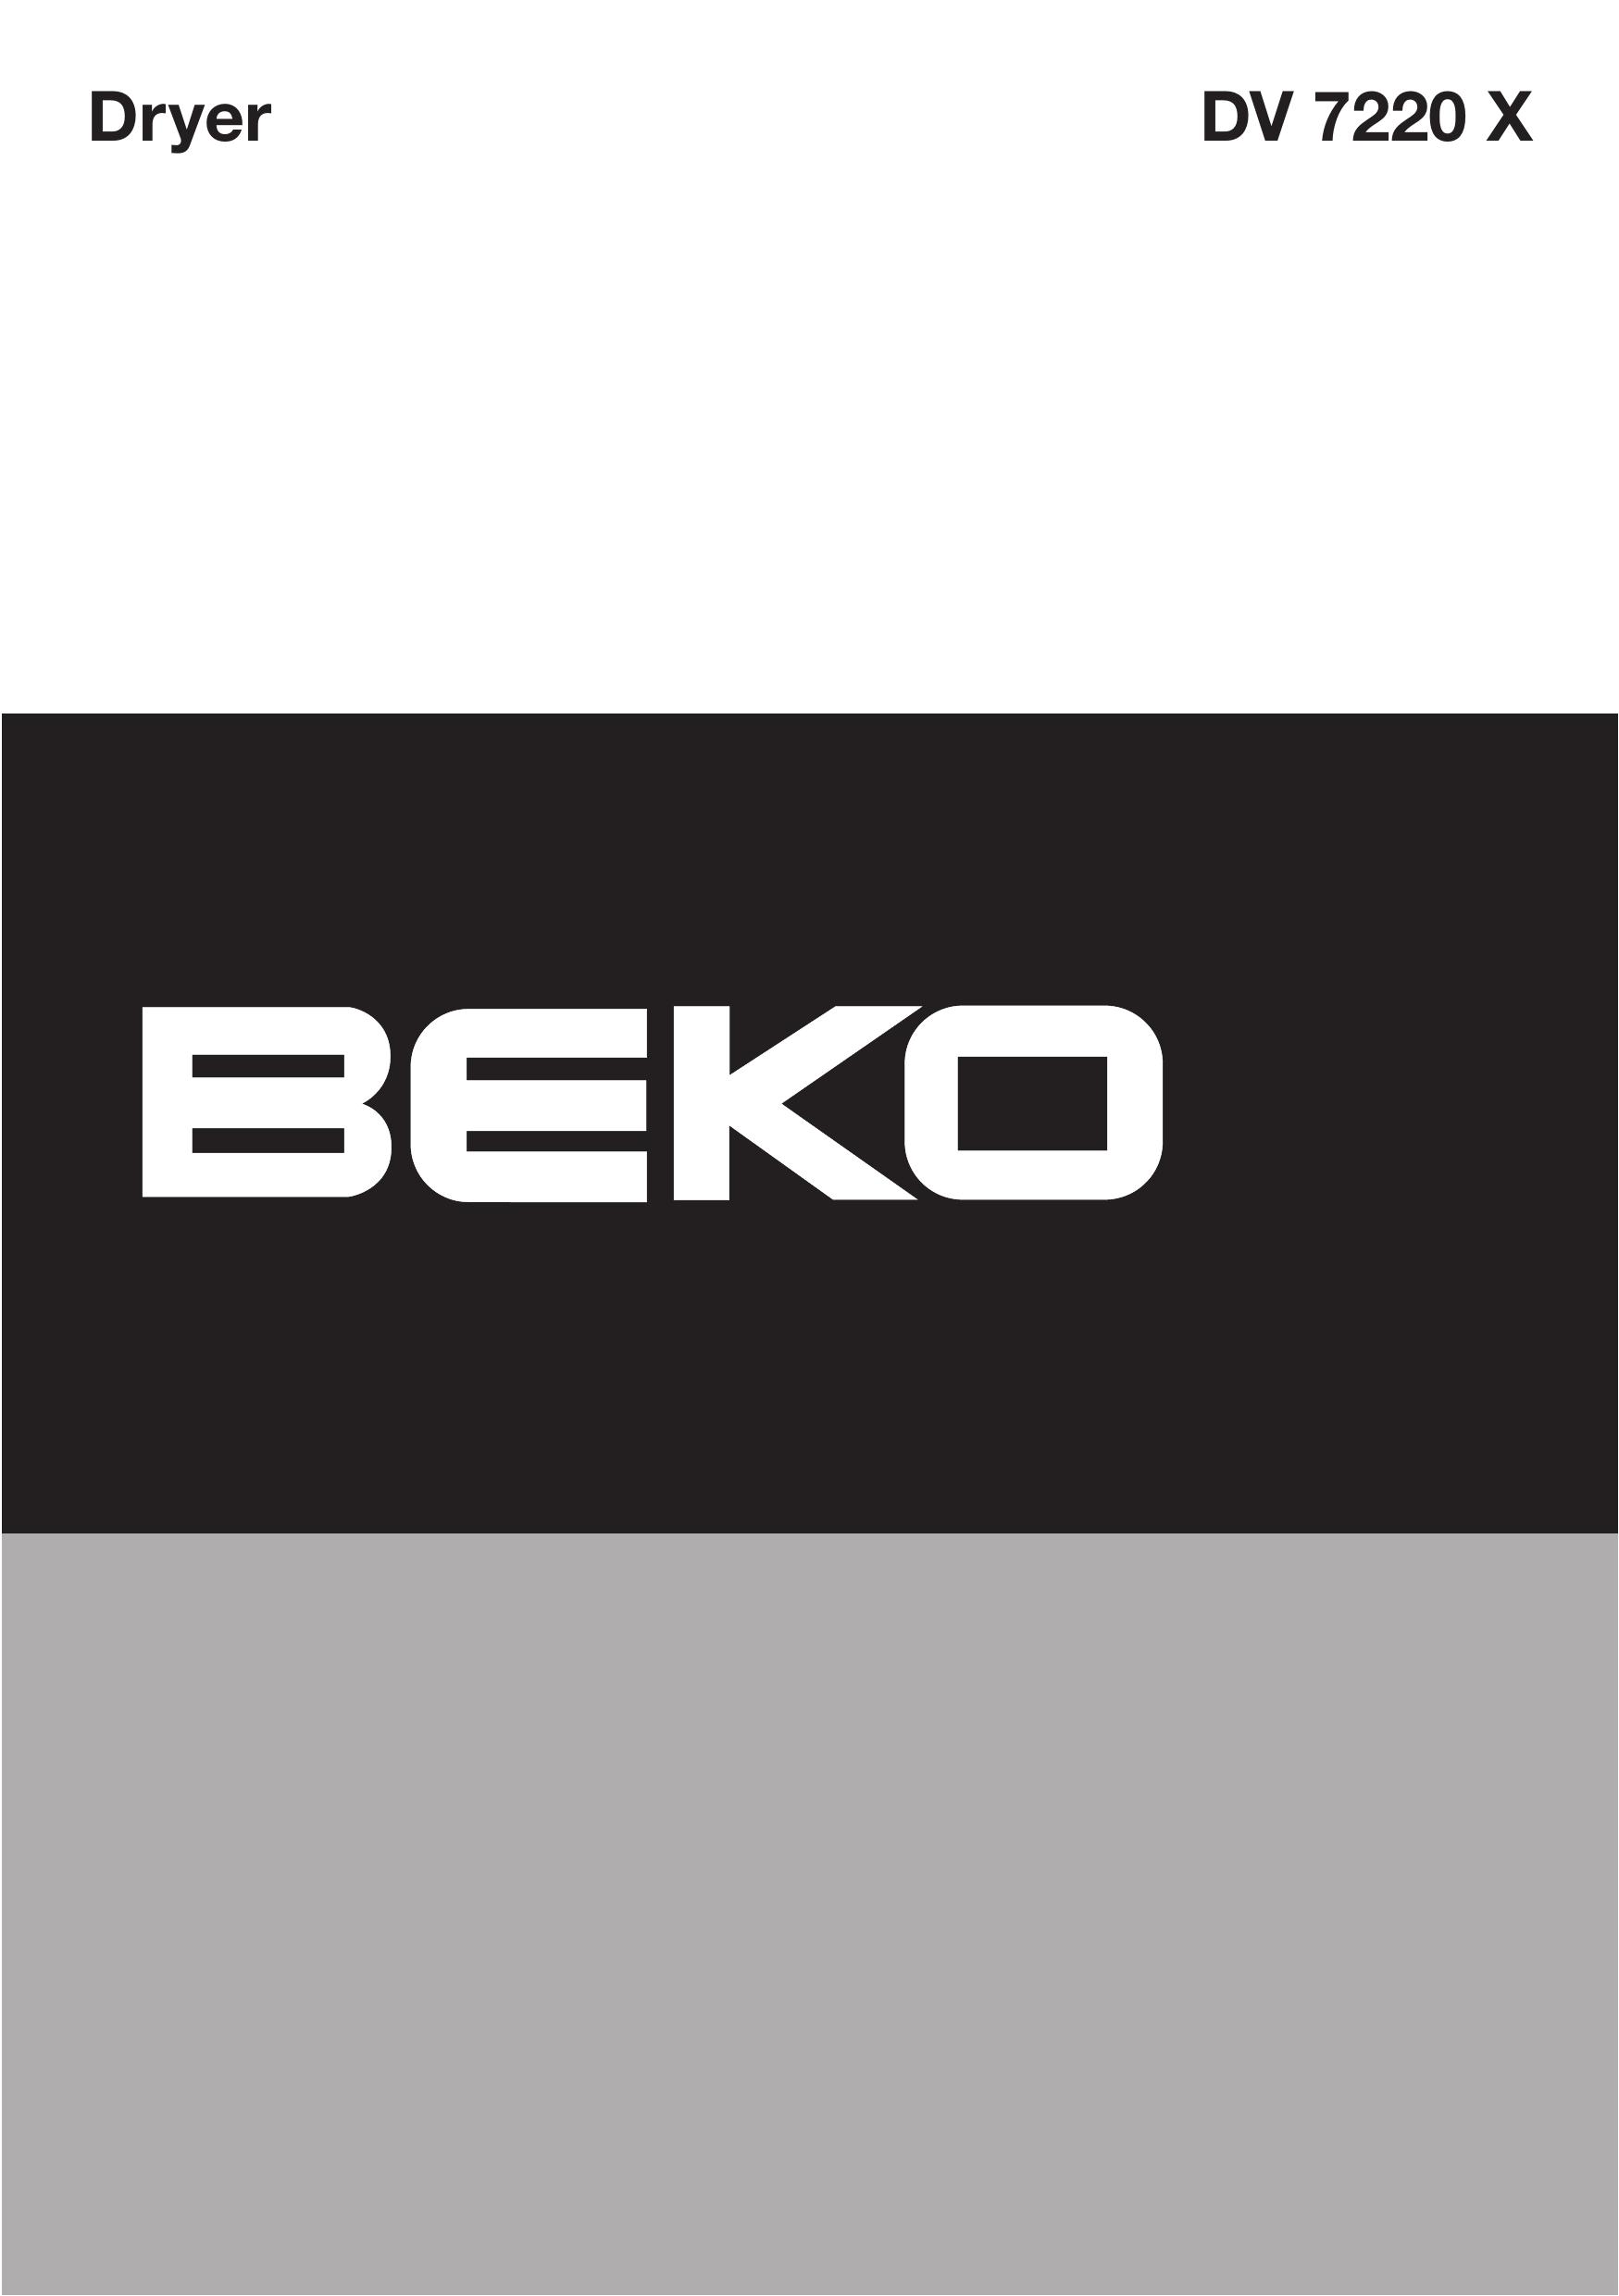 Beko DV 7220 X Clothes Dryer User Manual